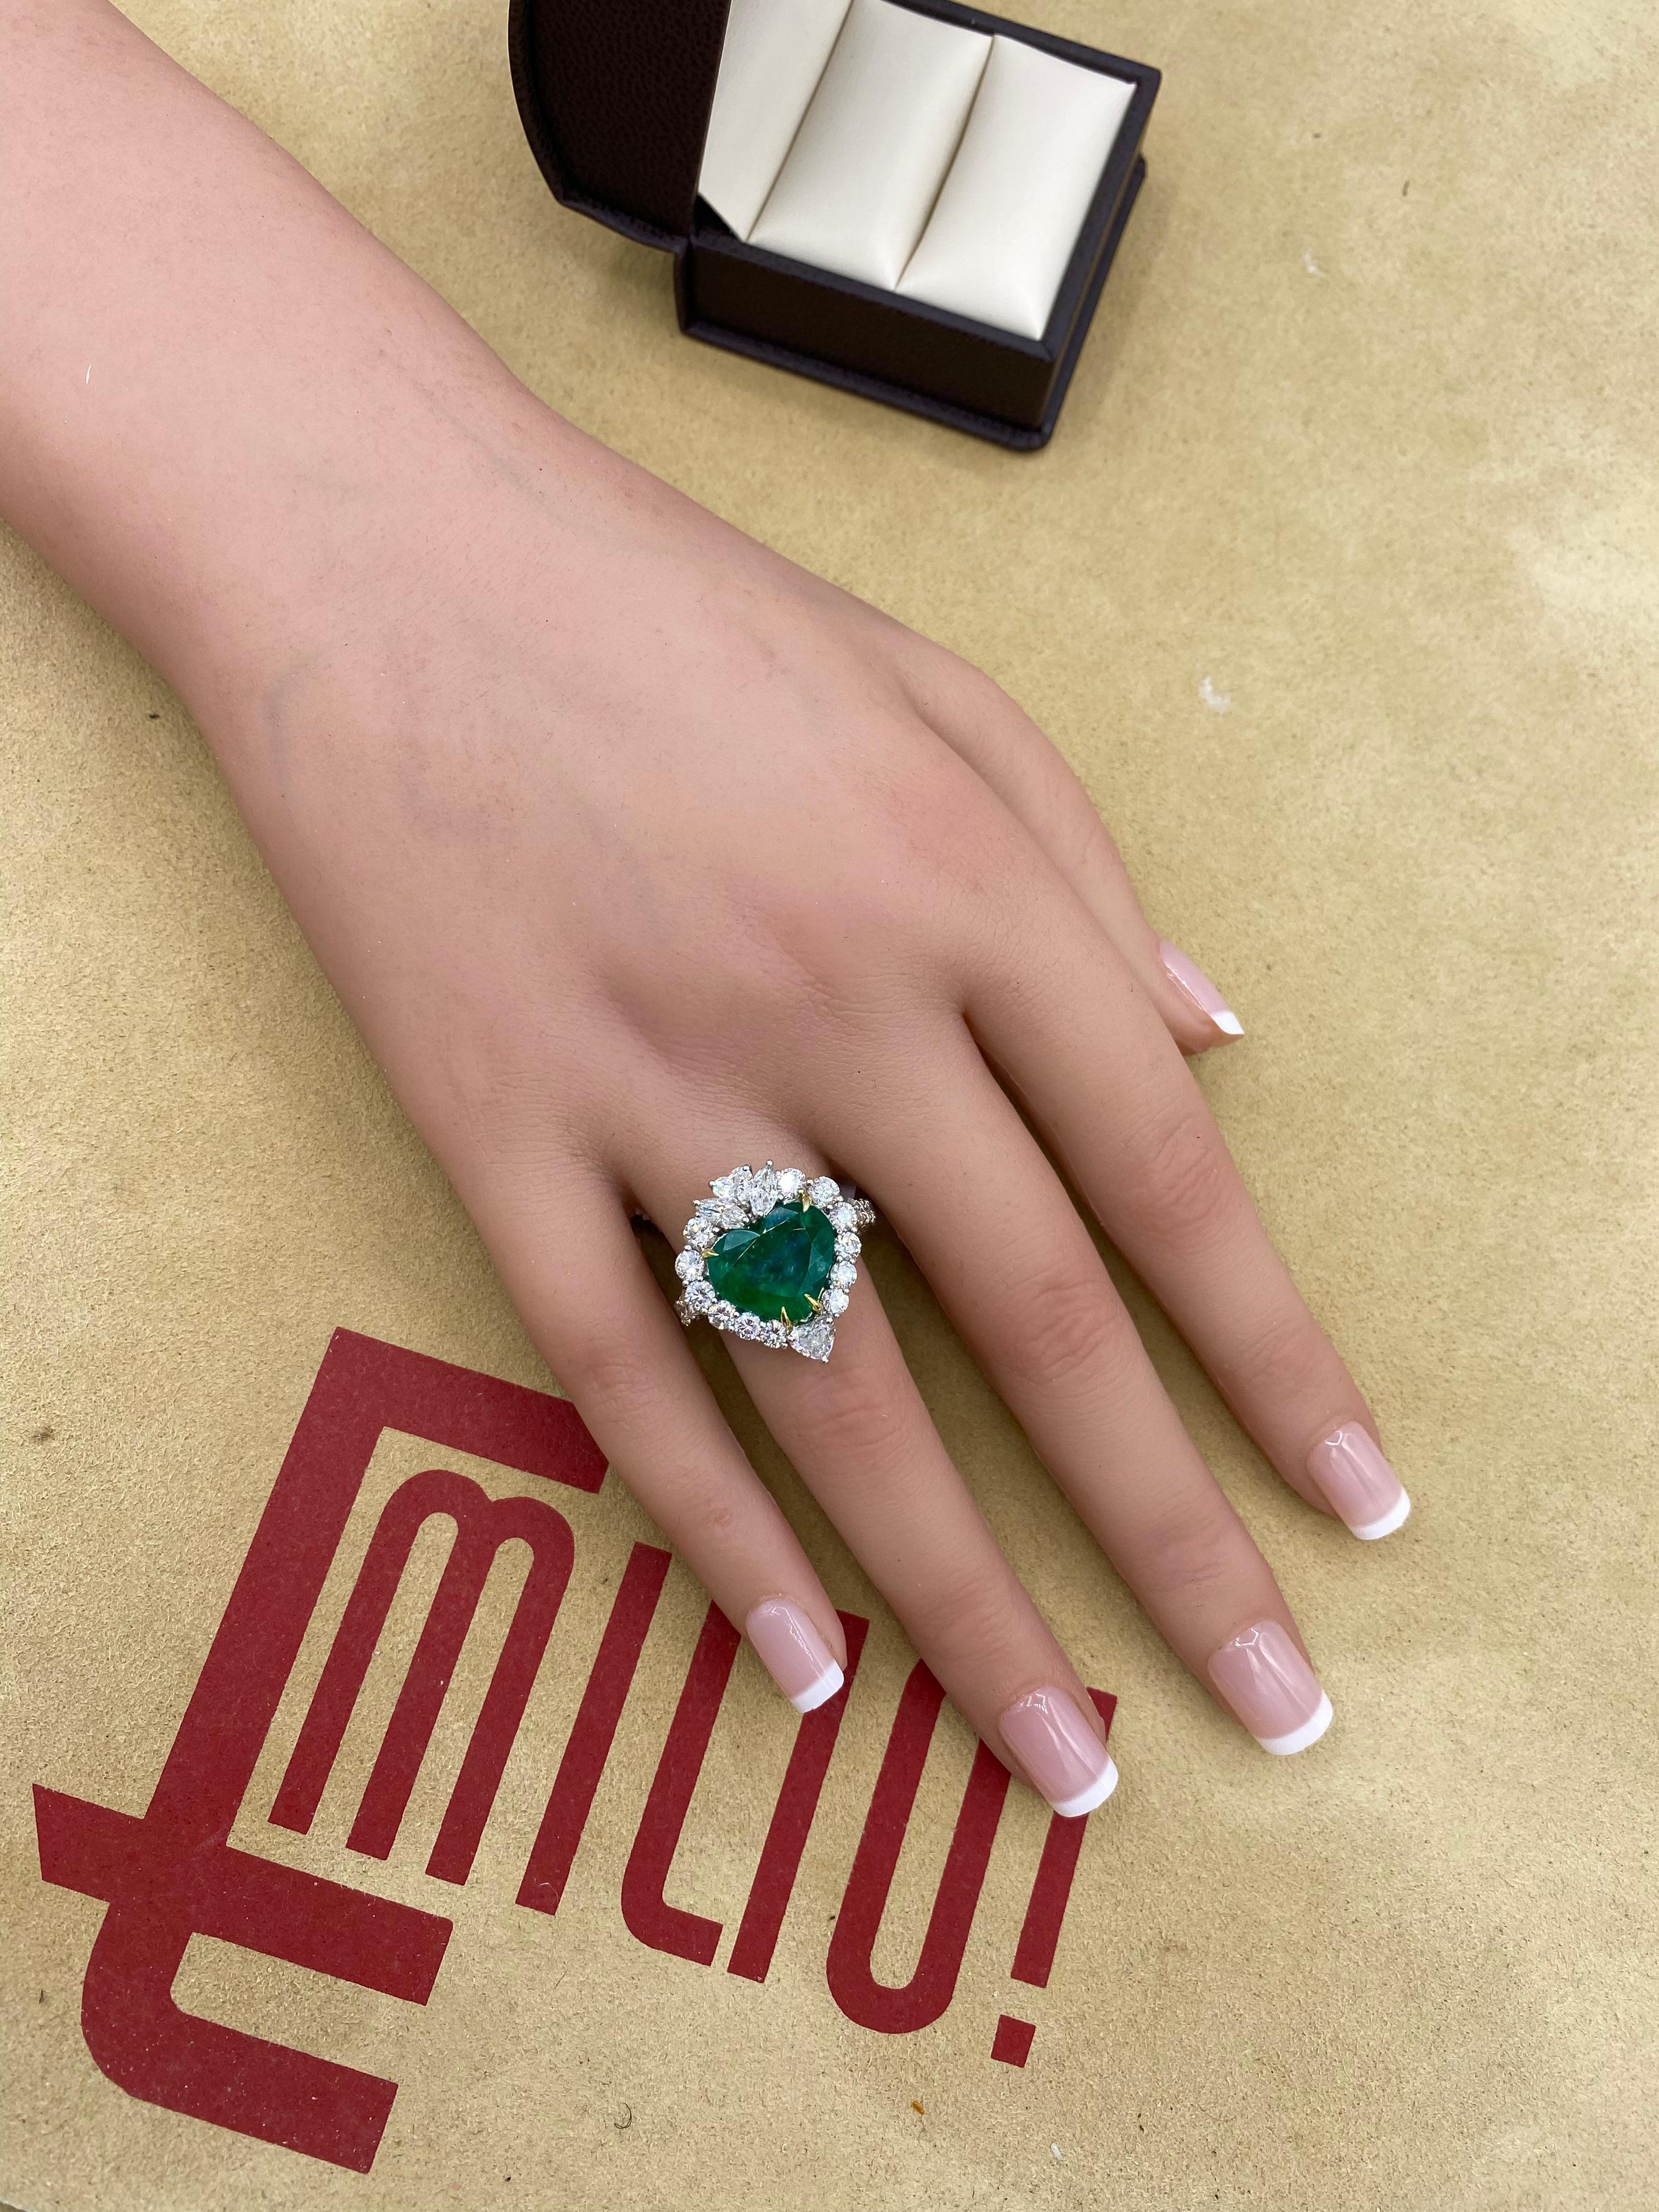 Emilio Jewelry Certified 6.00 Carat Colombian Muzo Vivid Green Diamond Ring For Sale 3